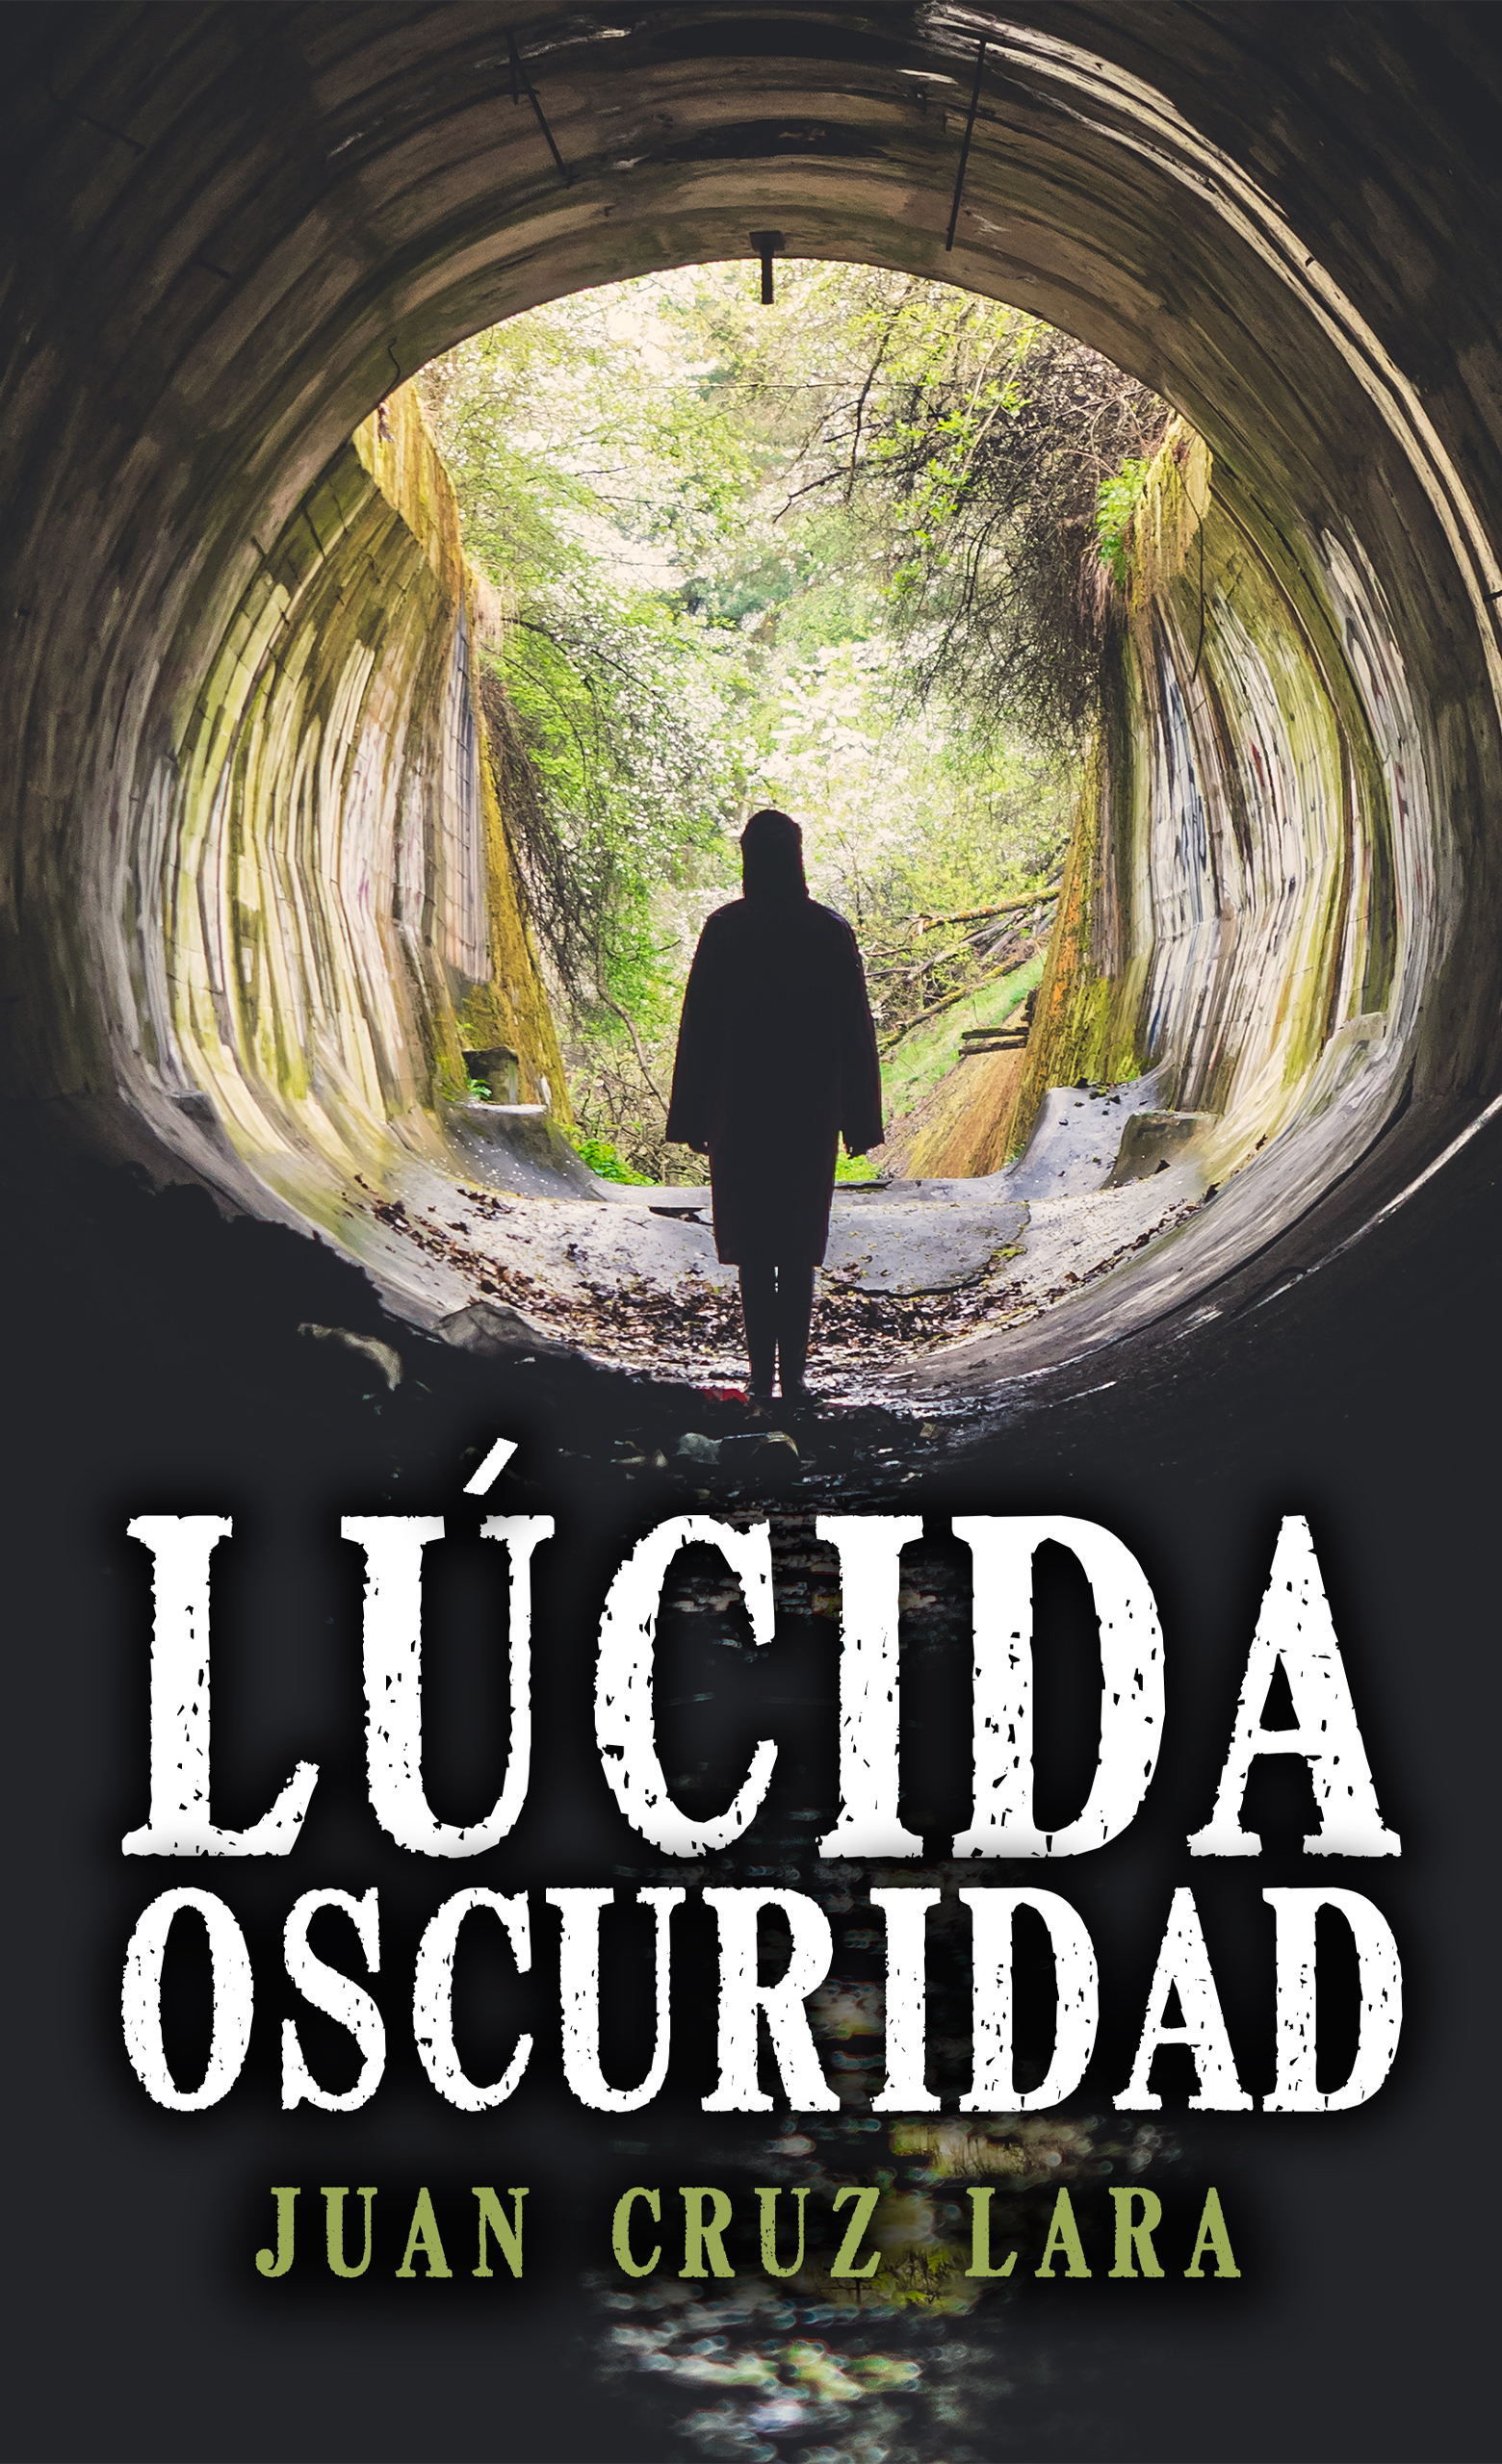 “Lúcida oscuridad”, nueva novela de Juan Cruz Lara